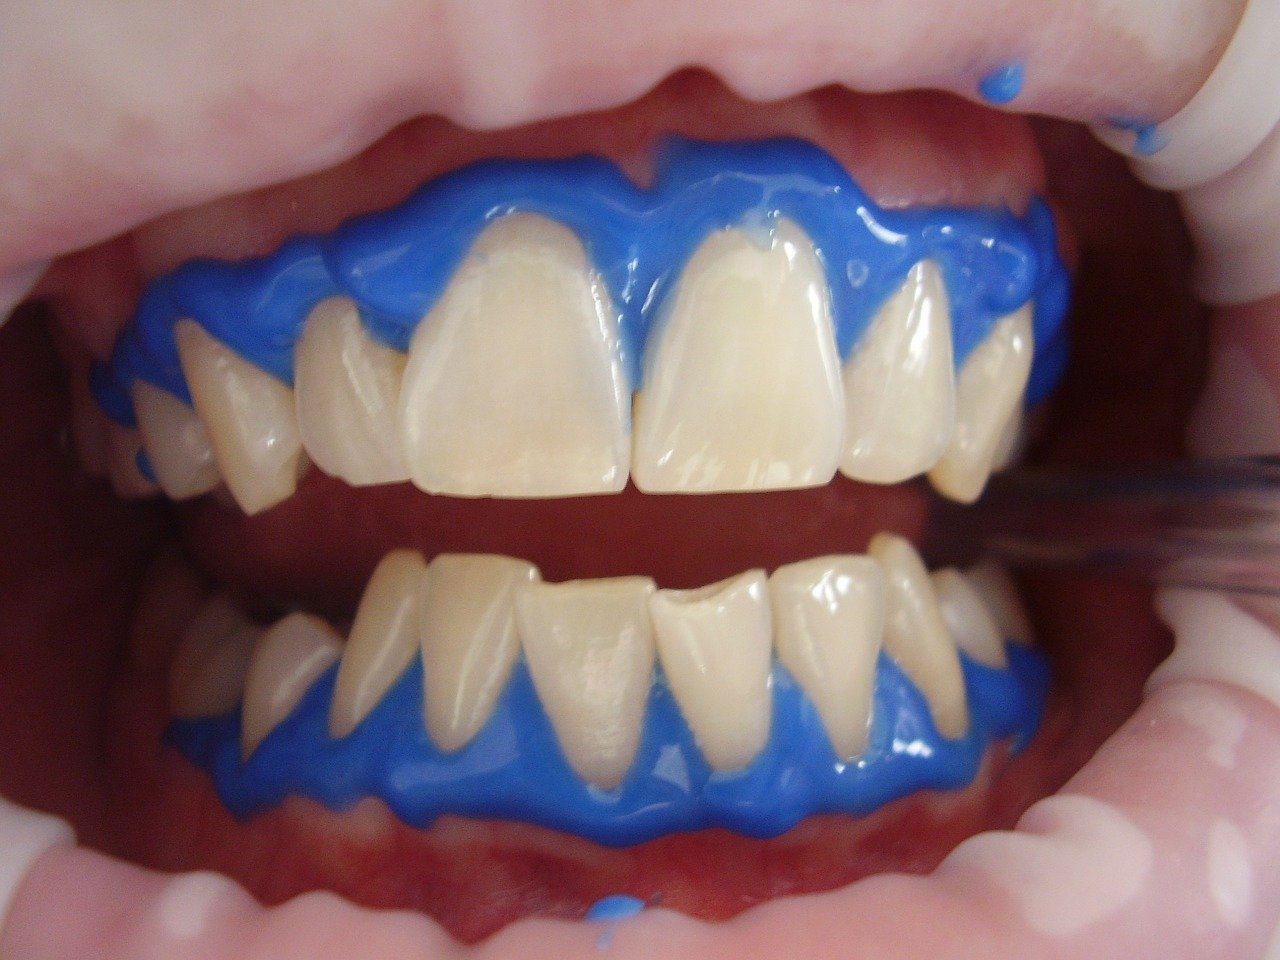 r90-laser-teeth-whitening-7164681280-15973216832433.jpg